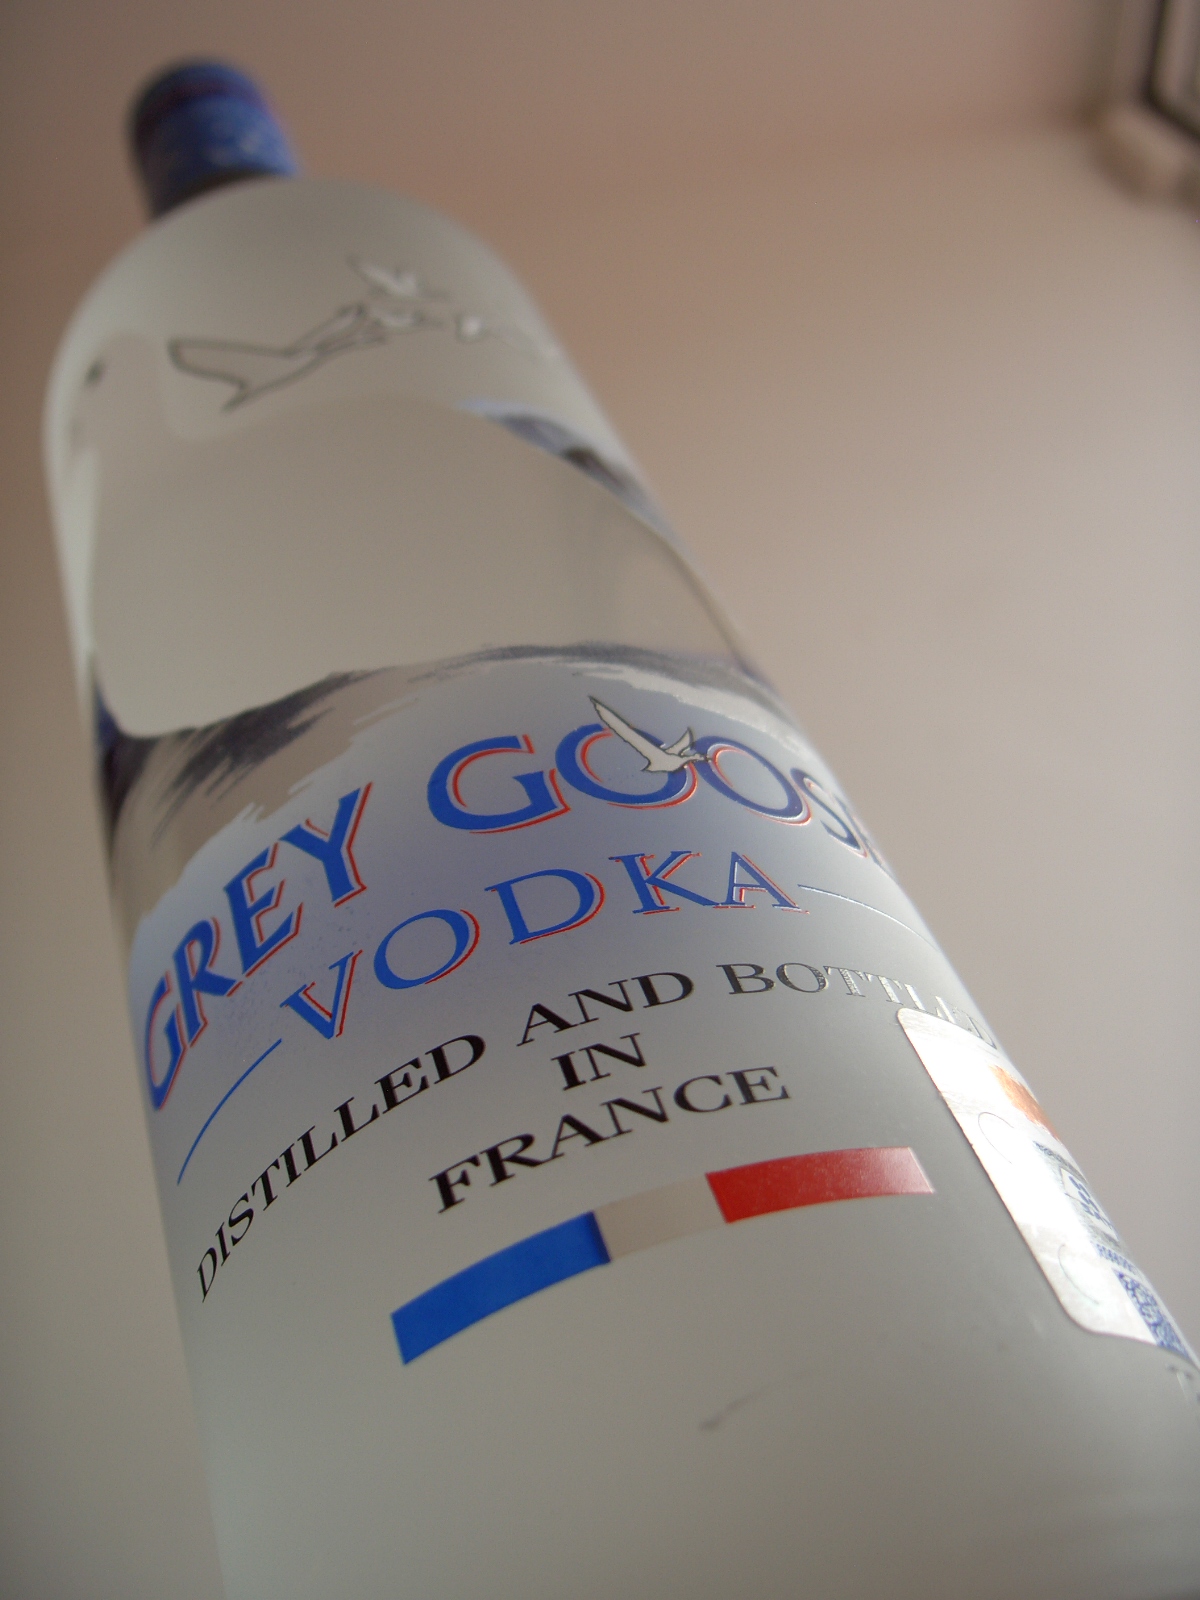 Grey Goose (vodka) - Wikipedia